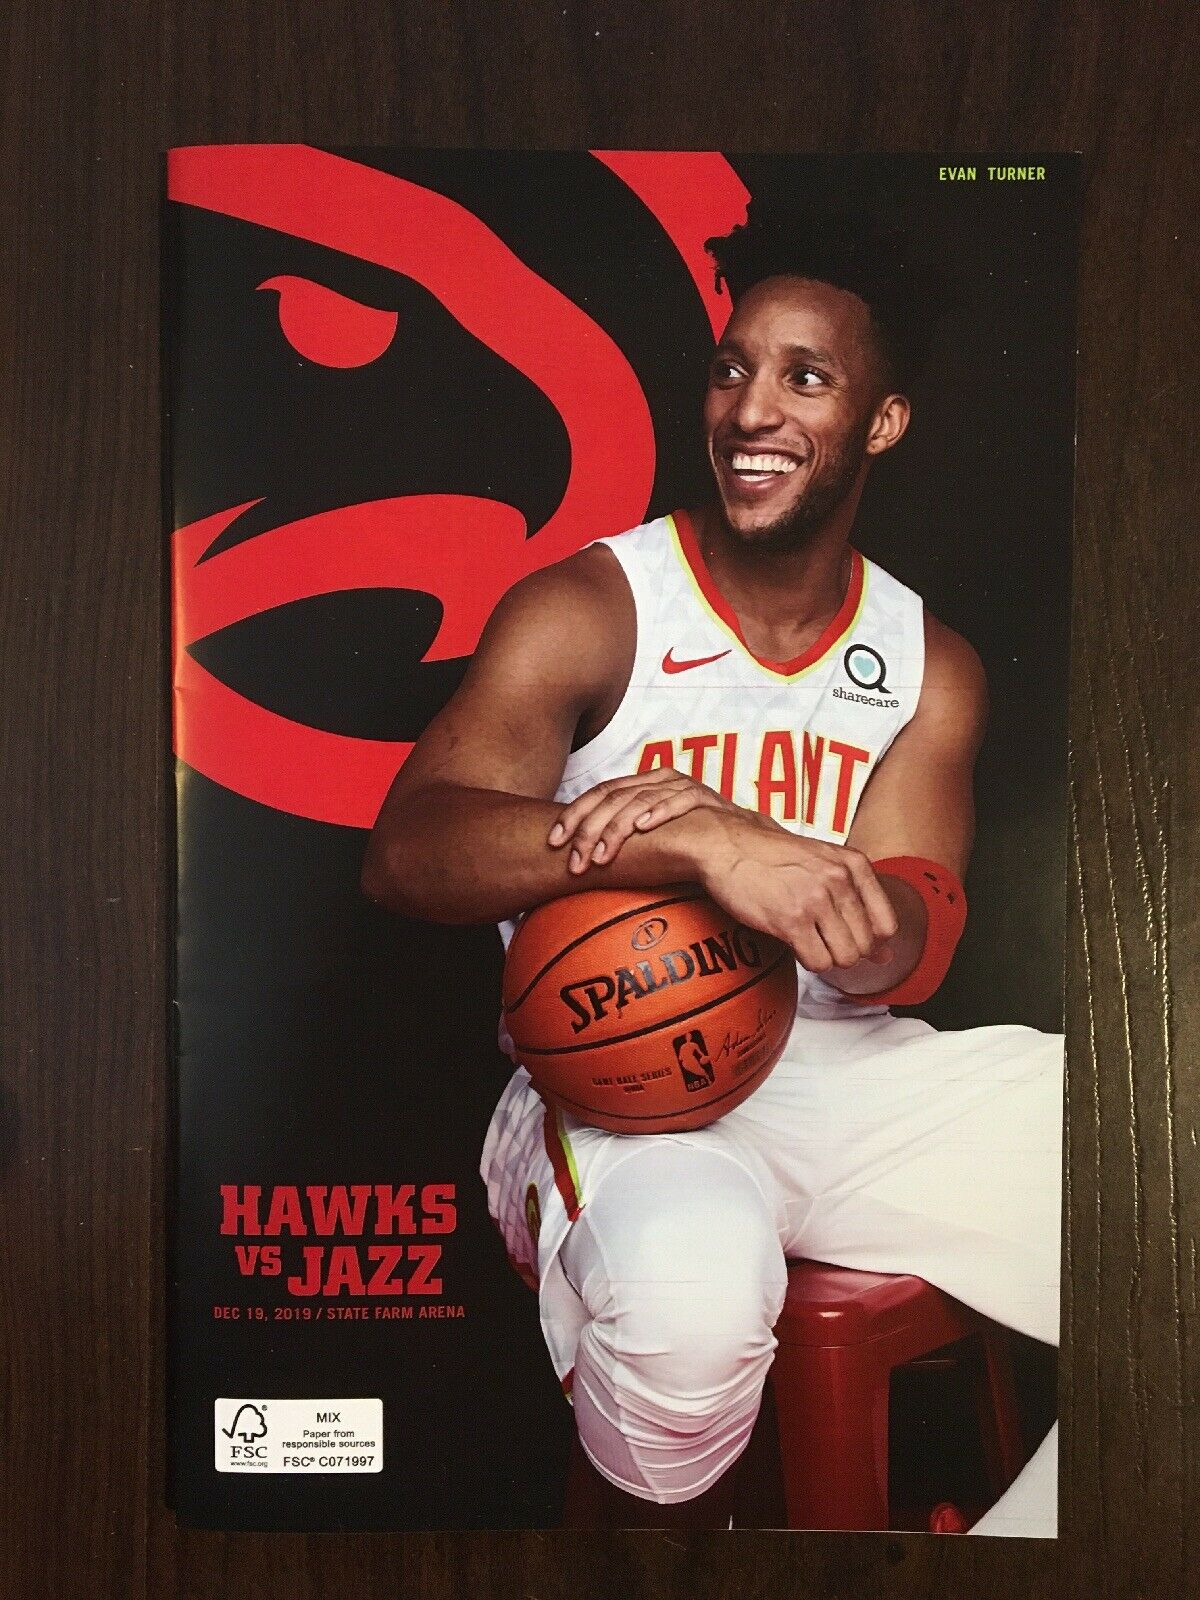 Atlanta Hawks Vs. Utah Jazz Basketball Program December 19, 2019 - Evan Turner